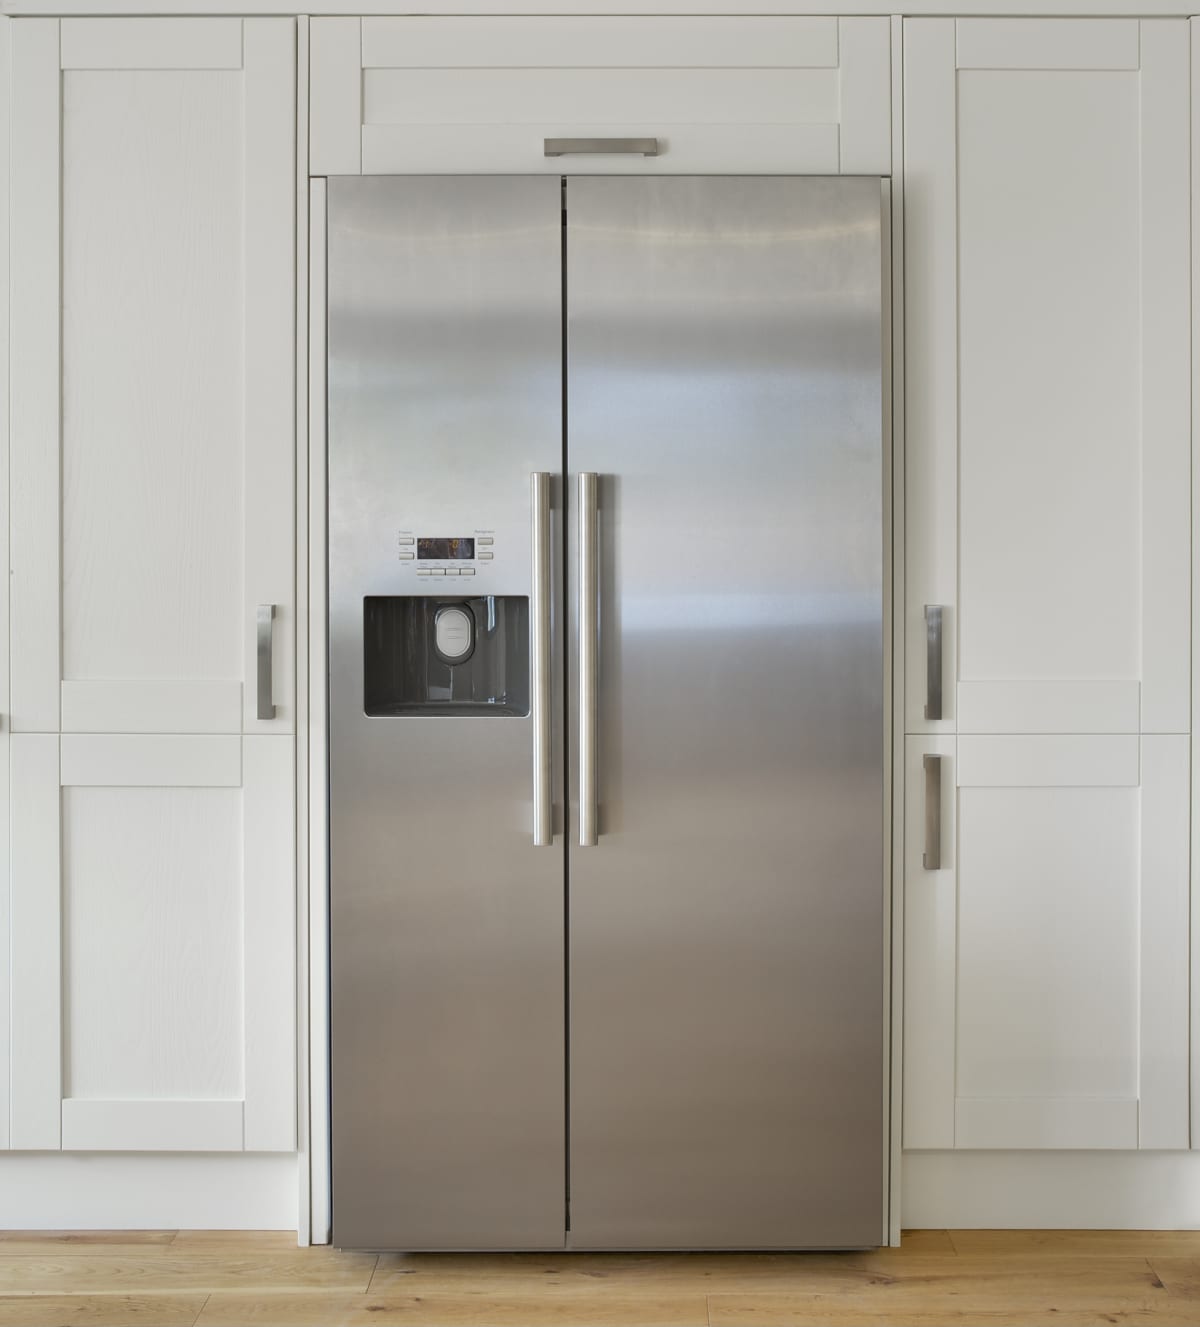 A modern American fridge freezer set into a bank of cream colored cupboards.